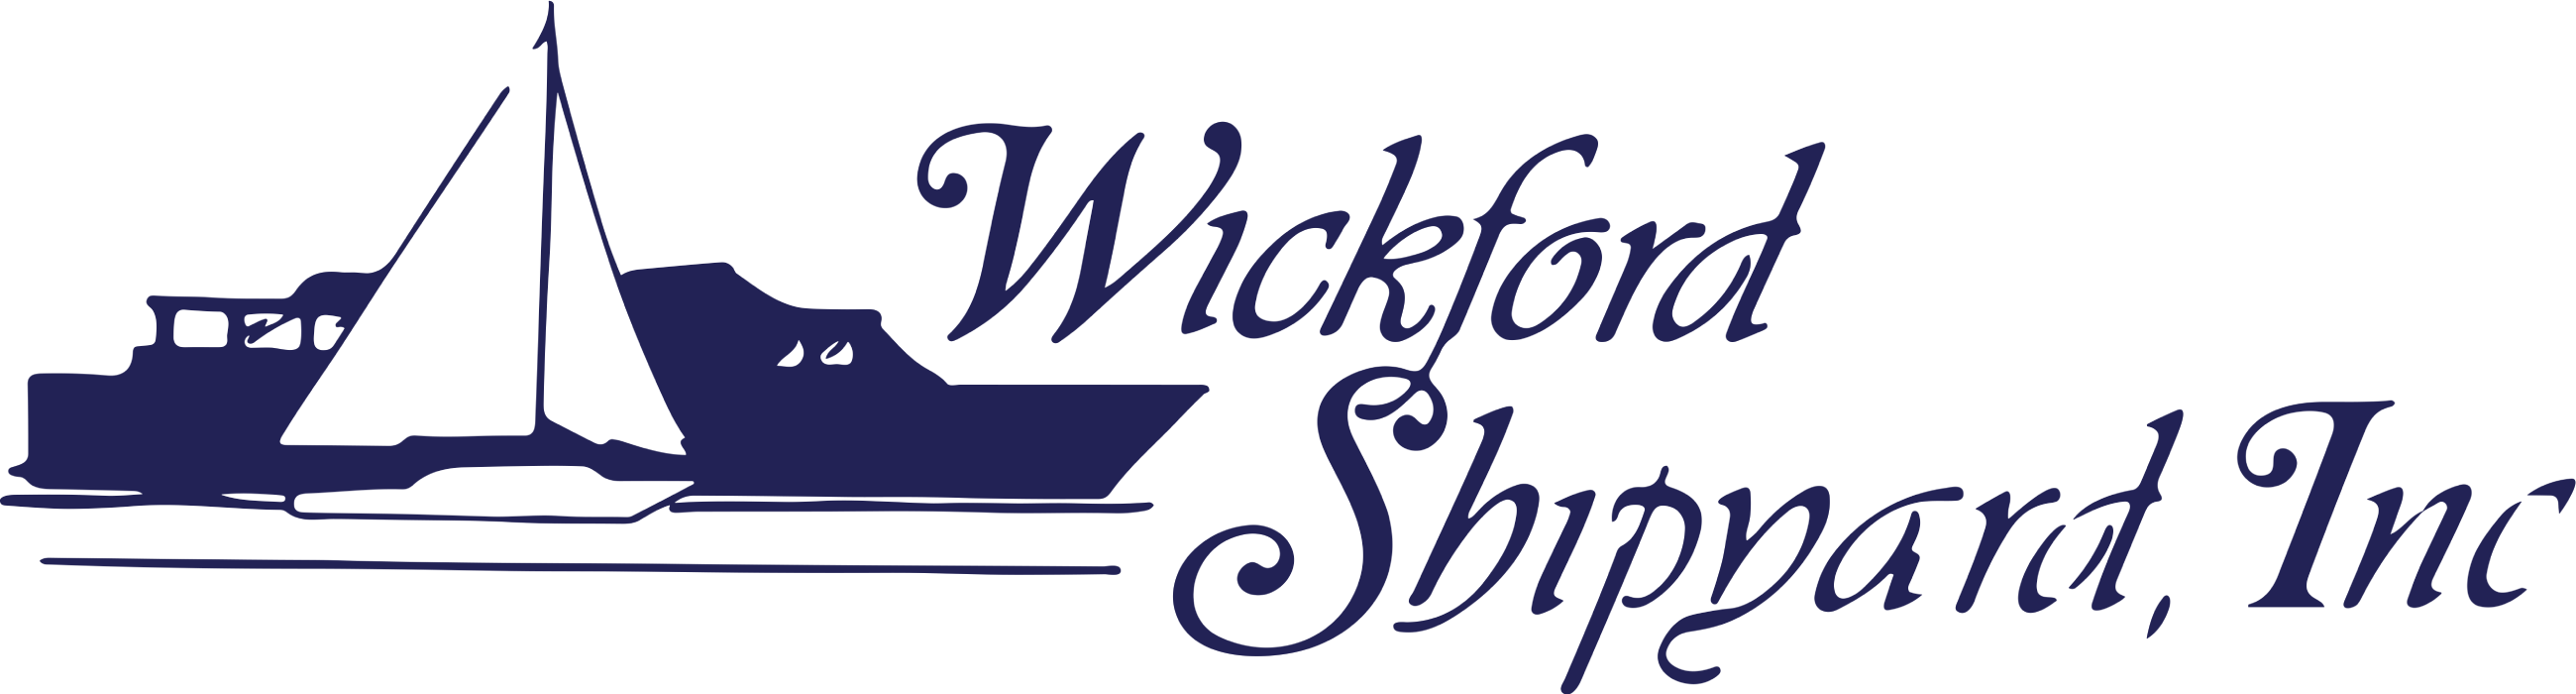 Wickford Shipyard ()